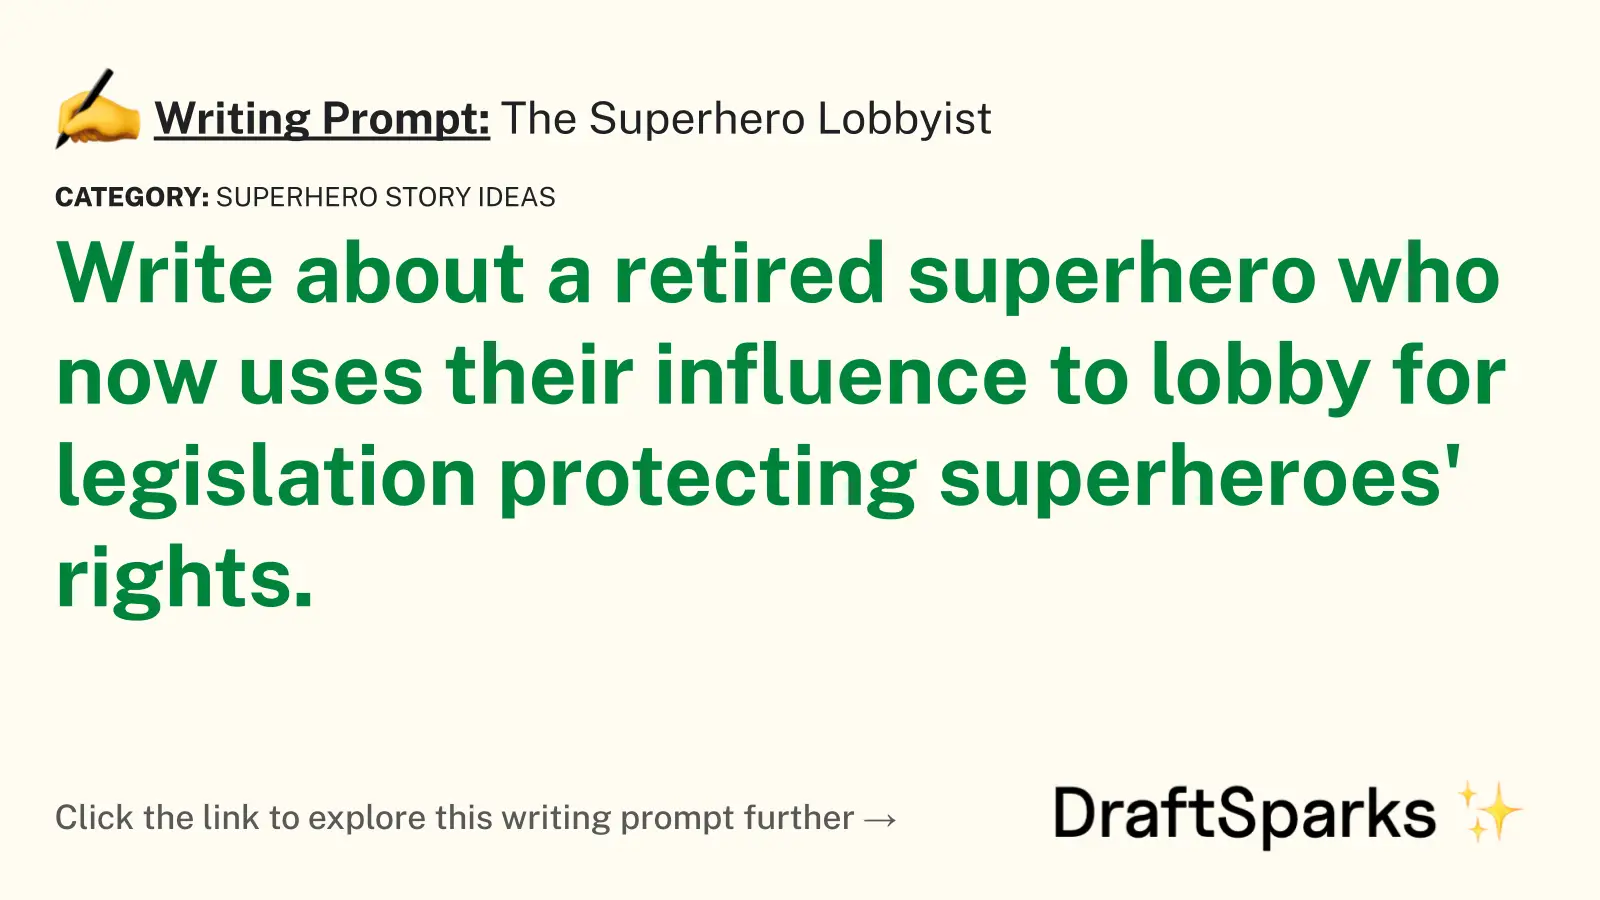 The Superhero Lobbyist